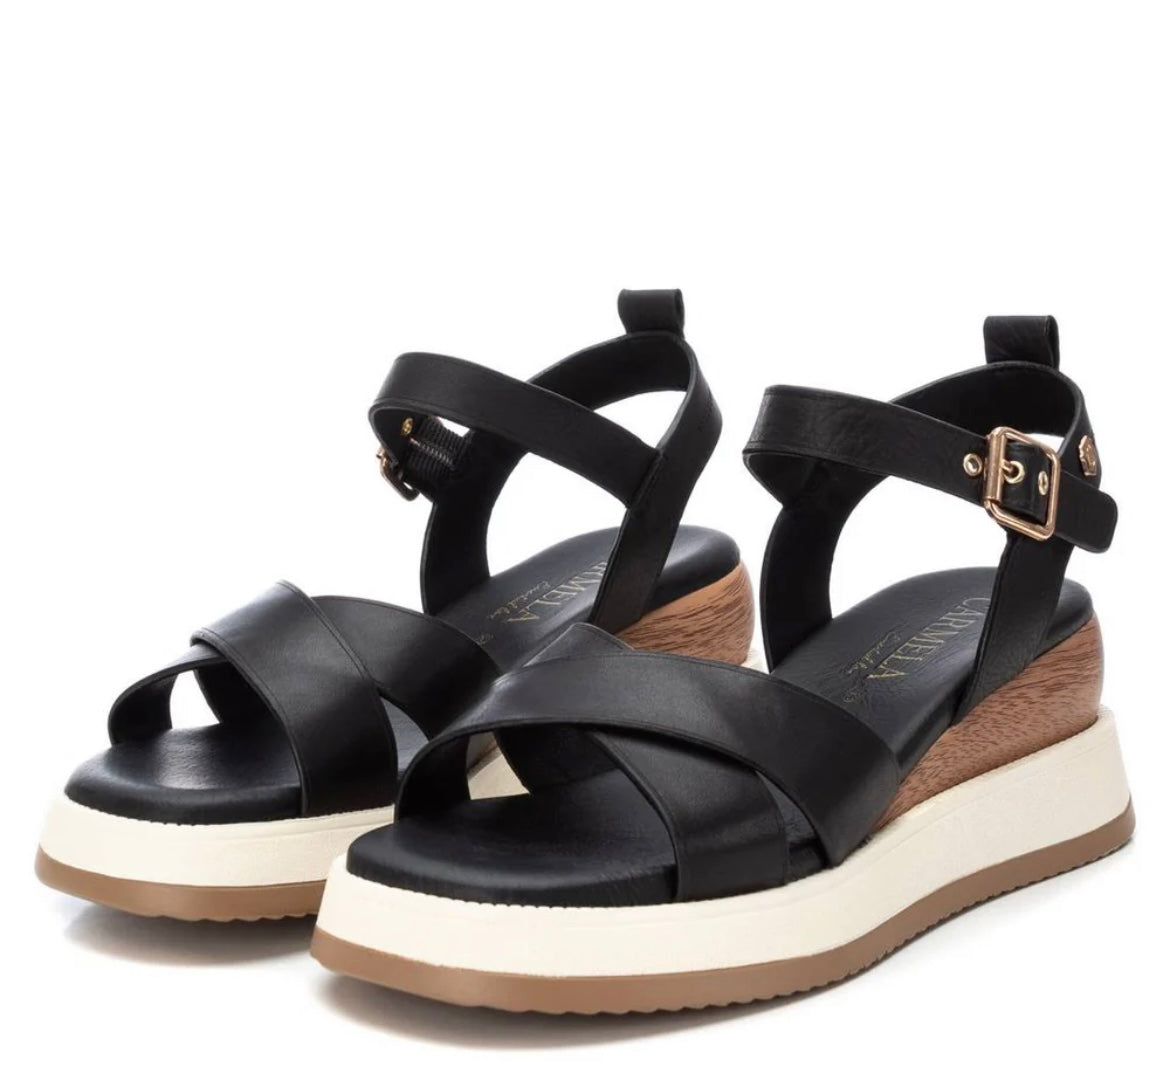 Carmela black leather wedge sandals